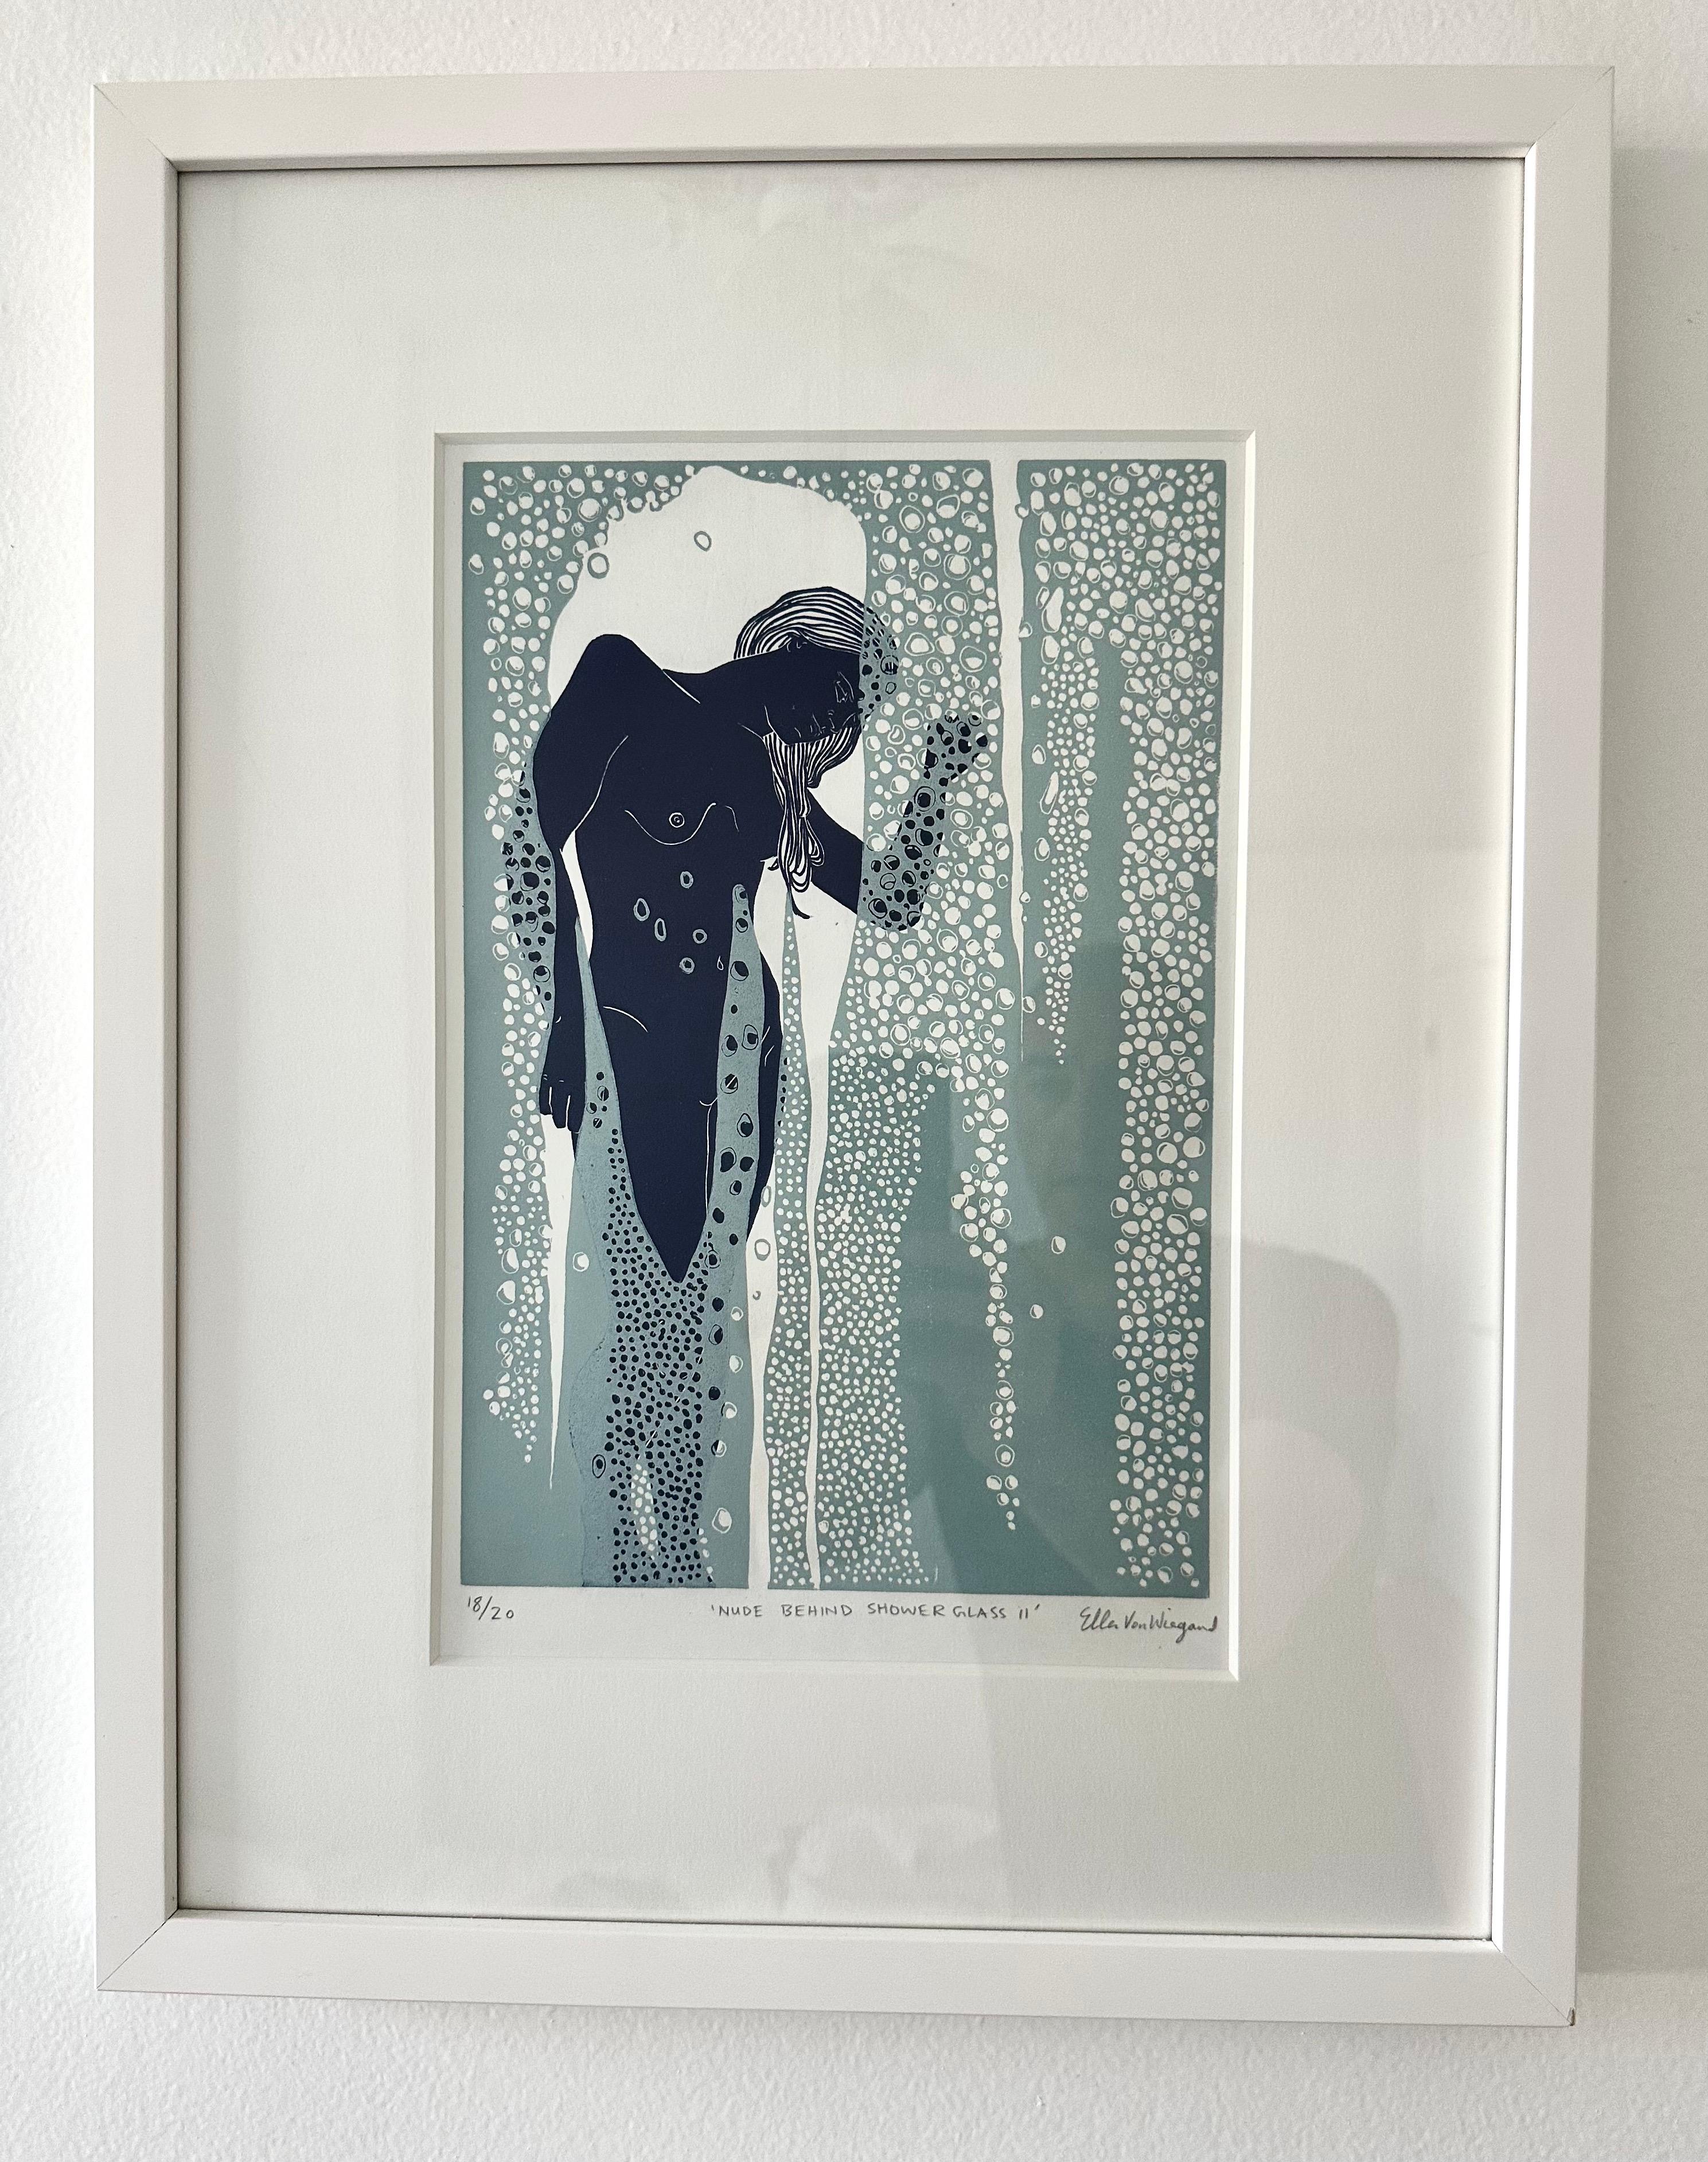 Nude Behind Shower Glass II, female figurative Linocut original print, Framed - Contemporary Print by Ellen Von Wiegand